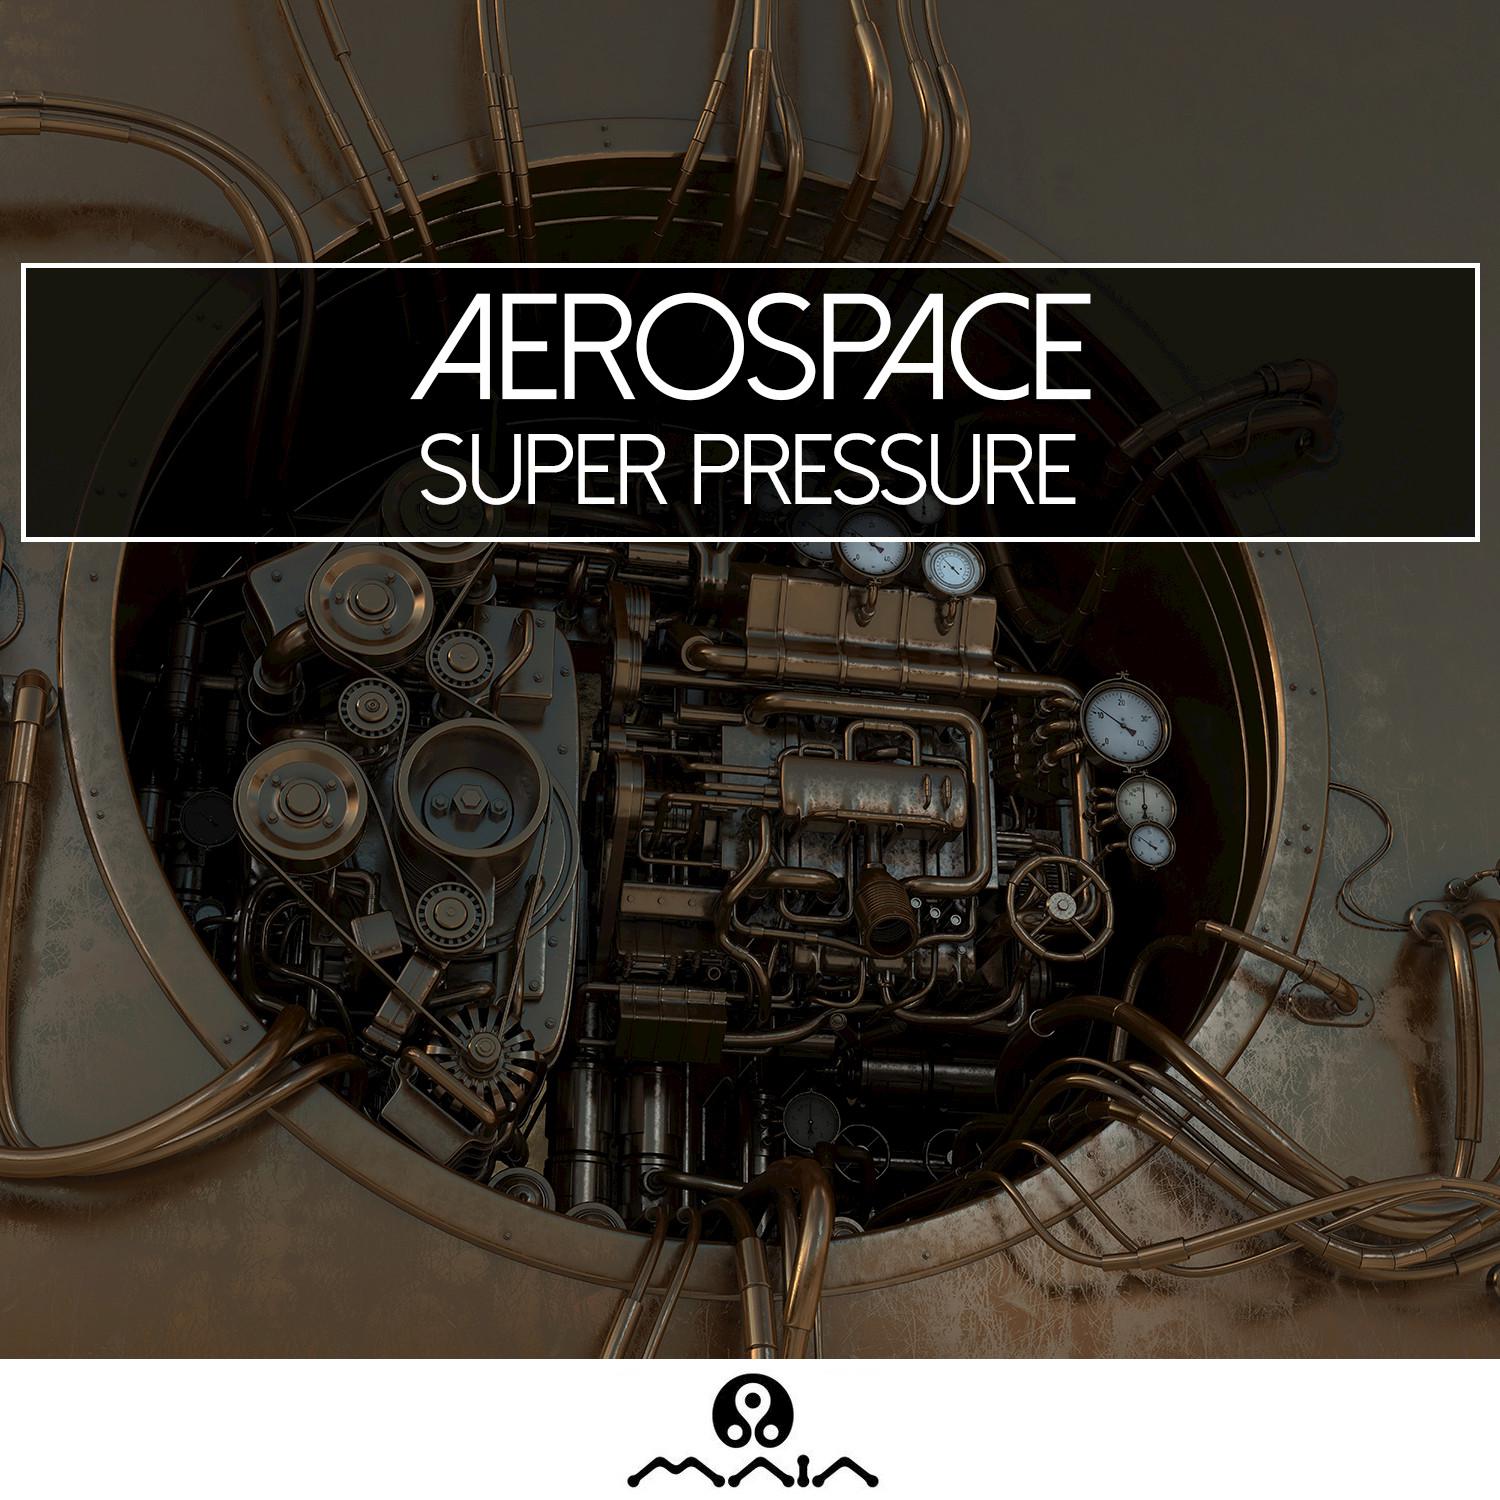 Aerospace - Super Pressure